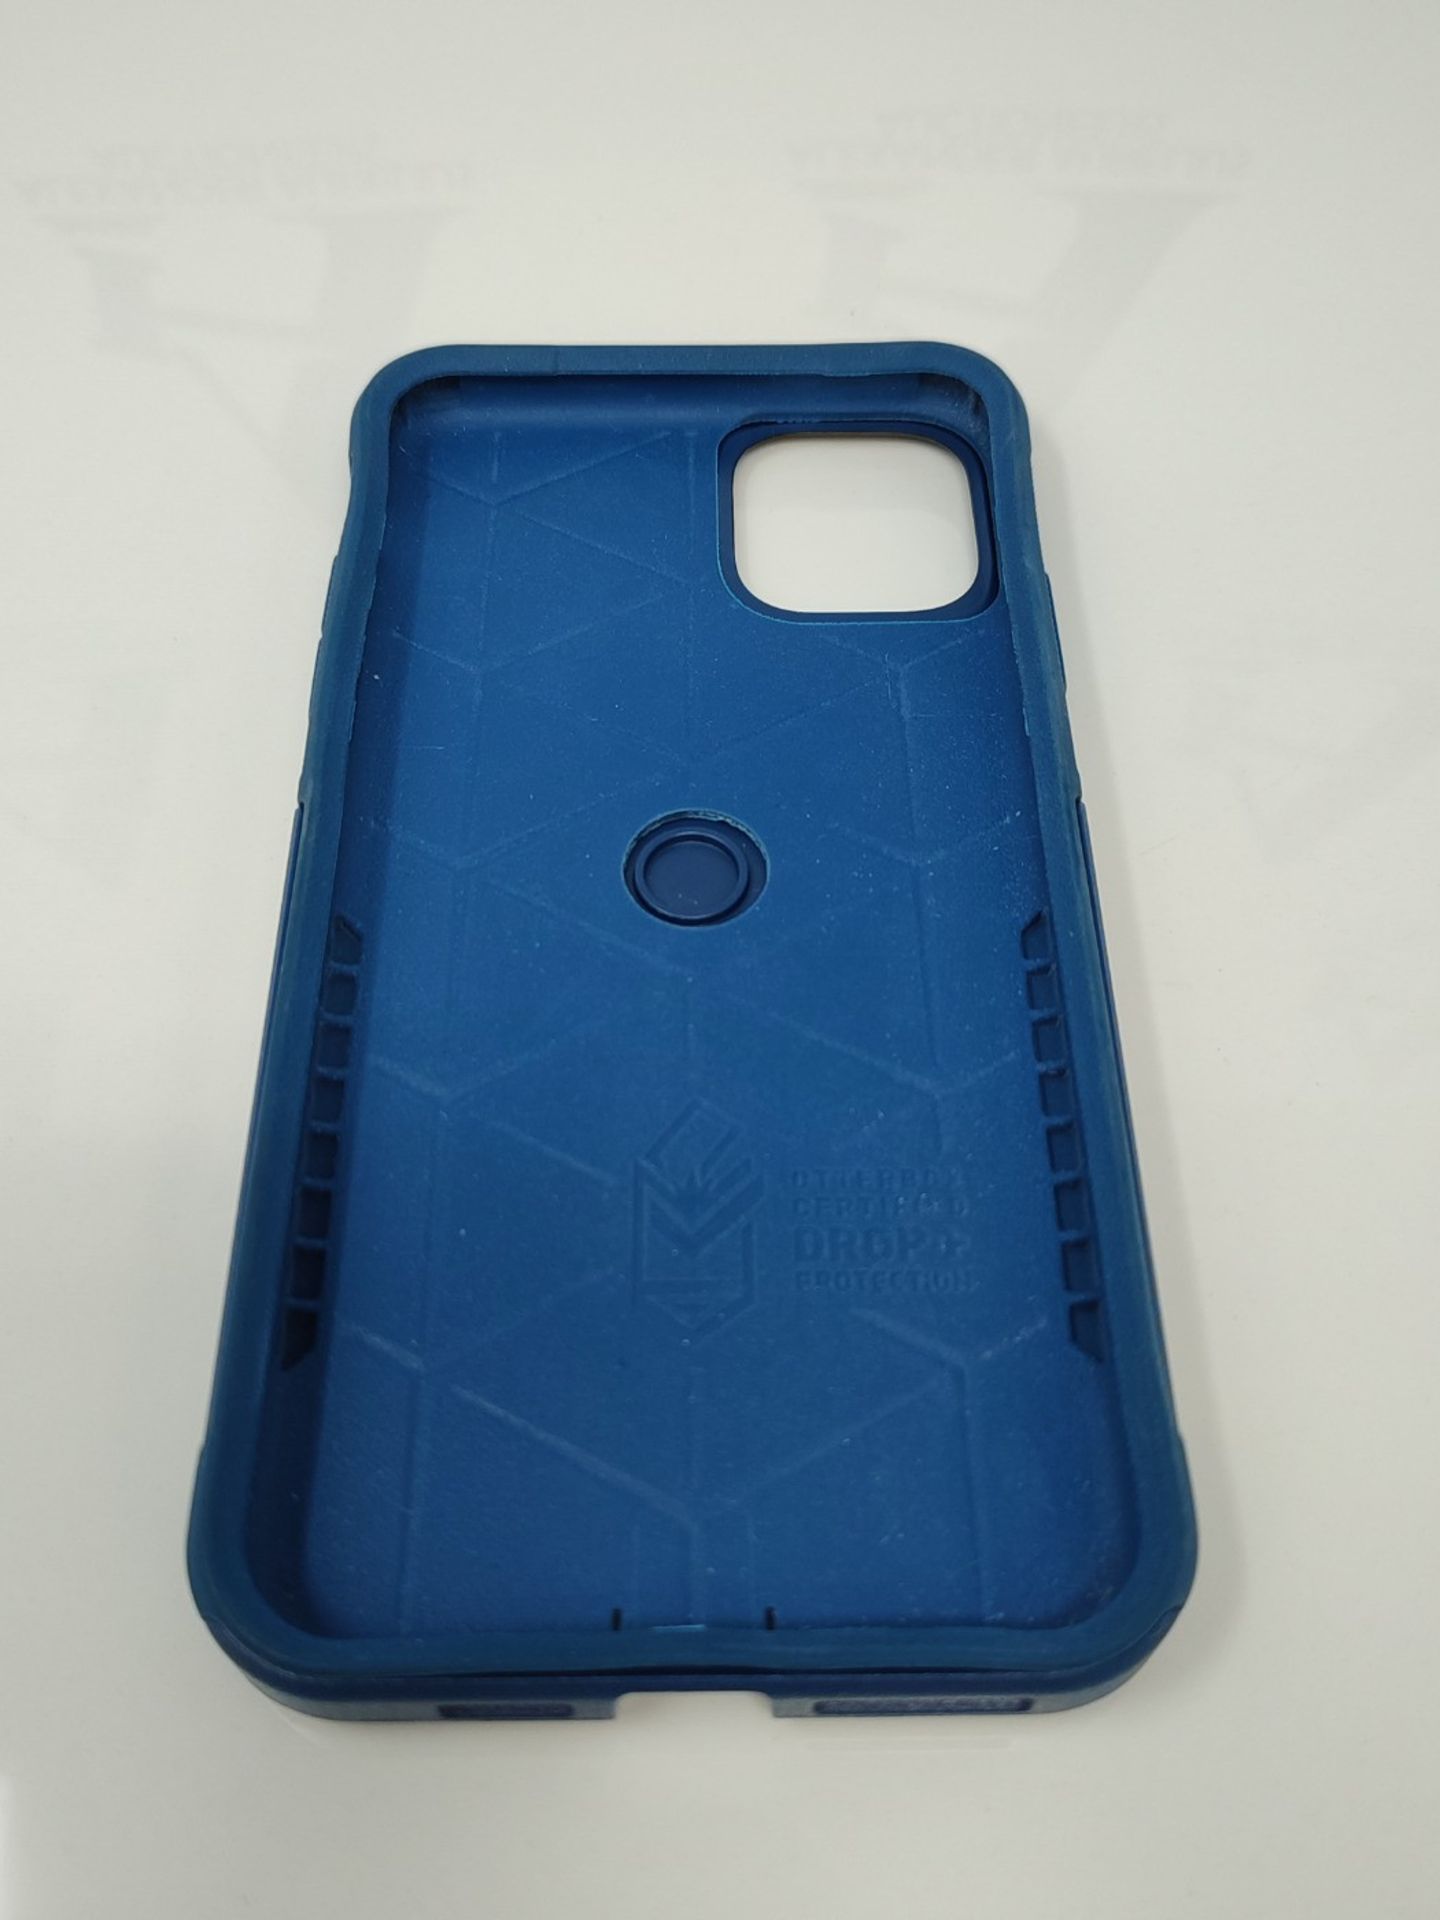 OtterBox iPhone 11 Pro Max Commuter Series Case - BESPOKE WAY (BLAZER BLUE/STORMY SEAS - Image 2 of 3